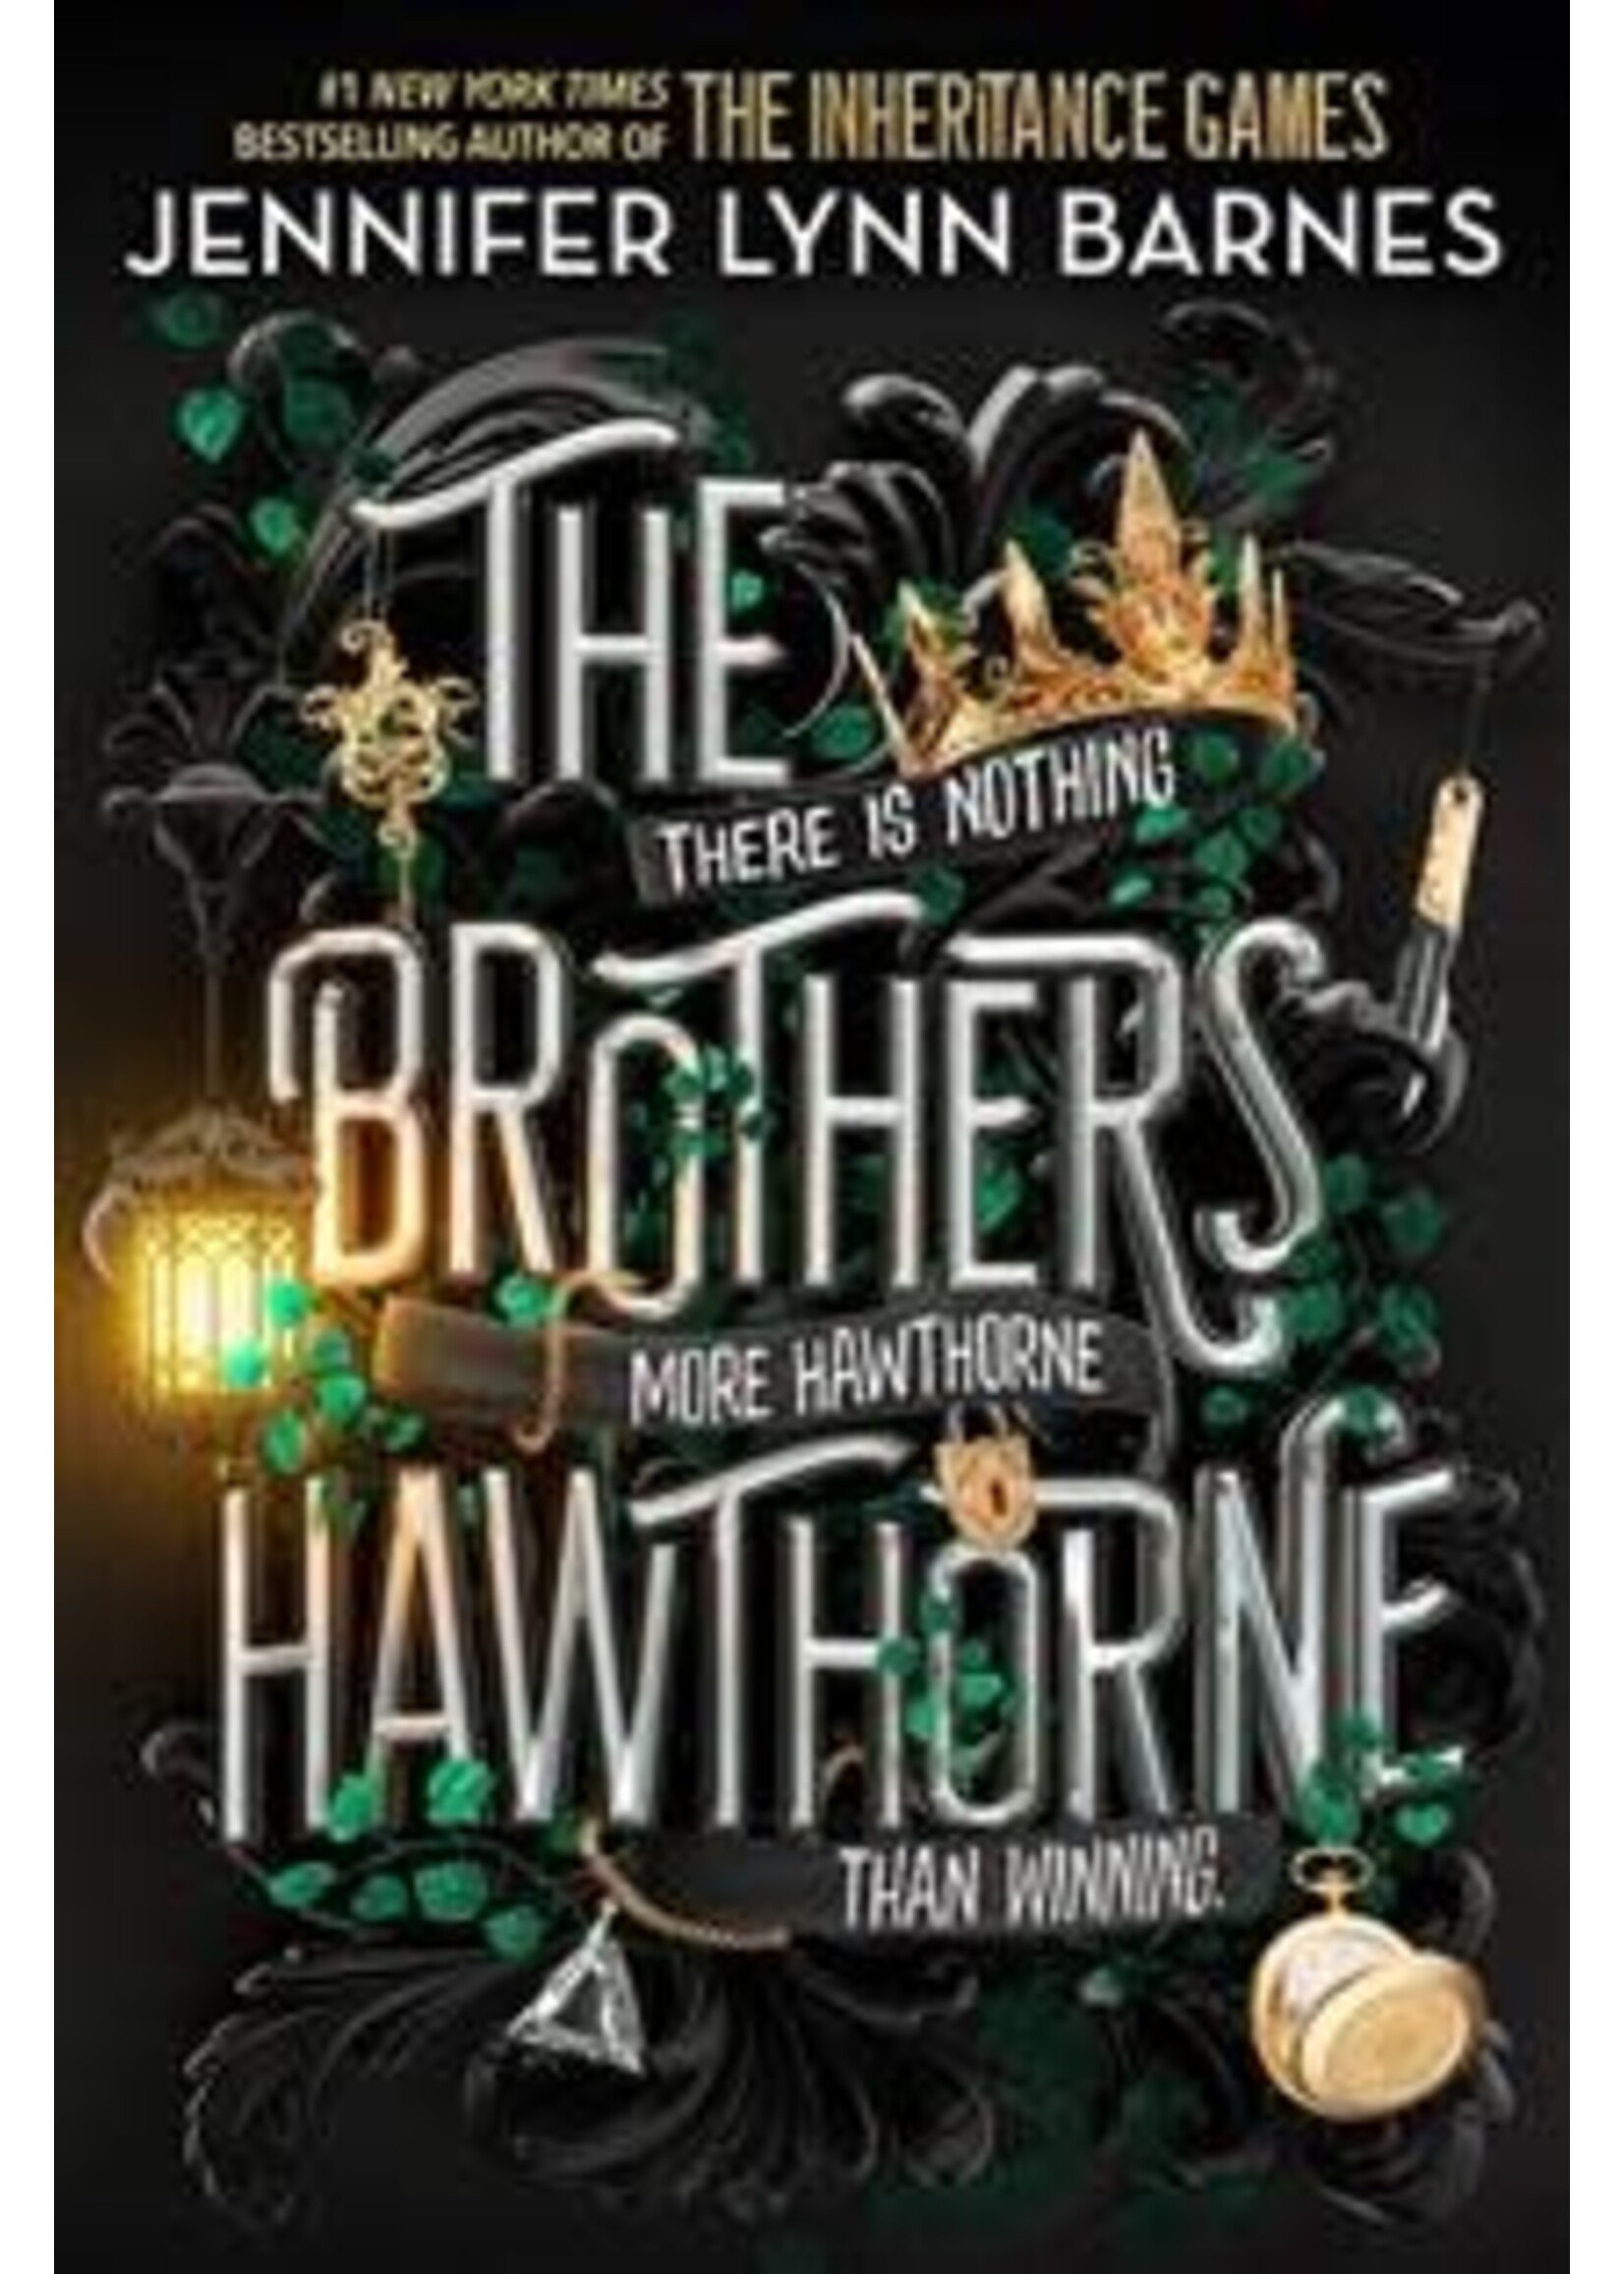 The Brothers Hawthorne (The Inheritance Games #4) by Jennifer Lynn Barnes